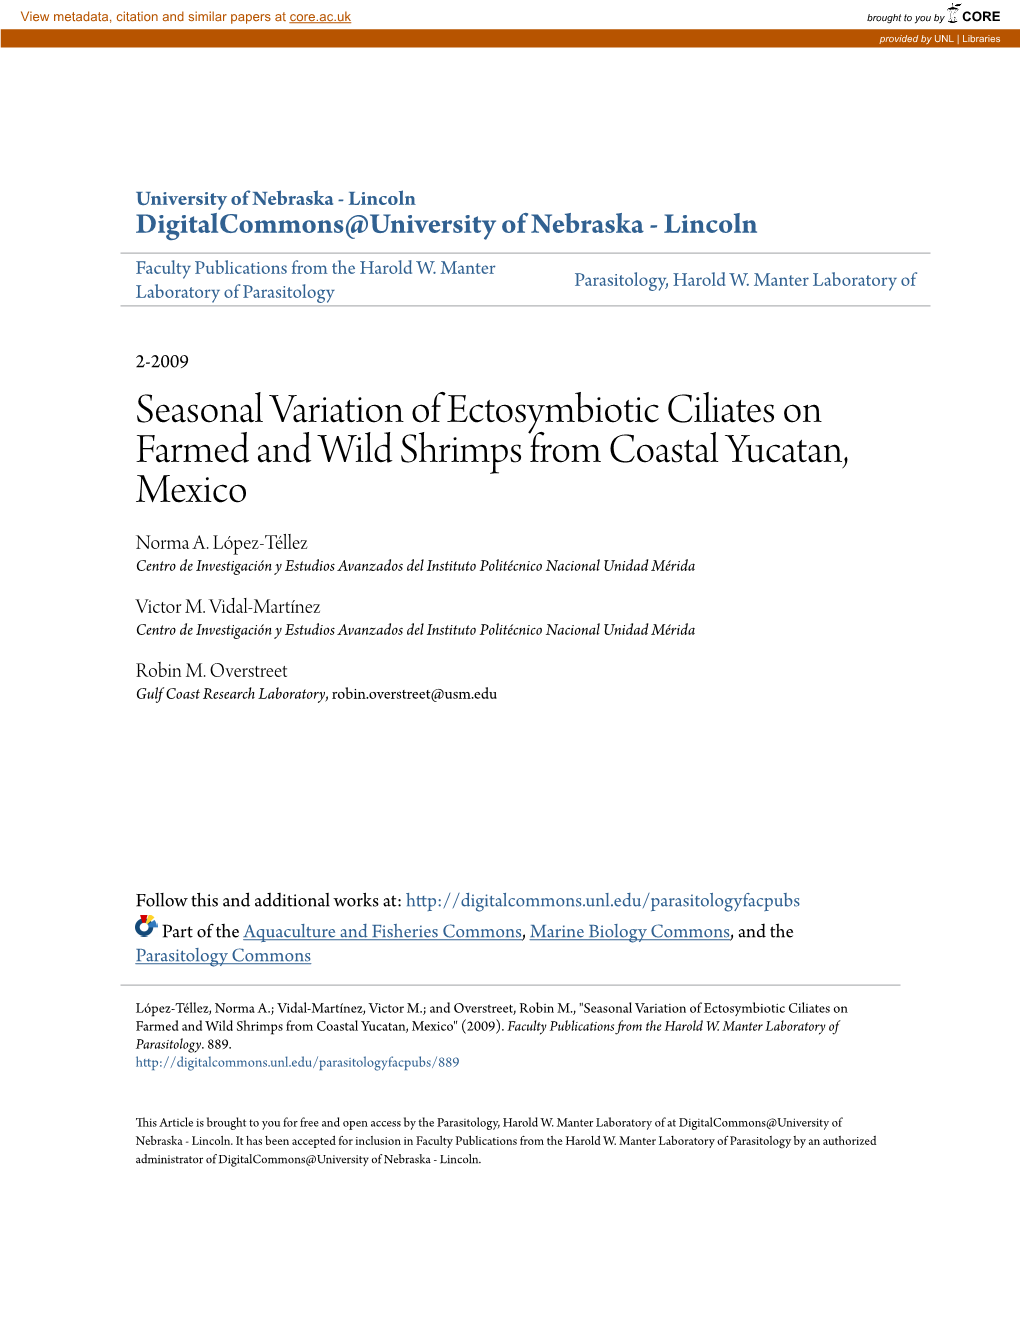 Seasonal Variation of Ectosymbiotic Ciliates on Farmed and Wild Shrimps from Coastal Yucatan, Mexico Norma A